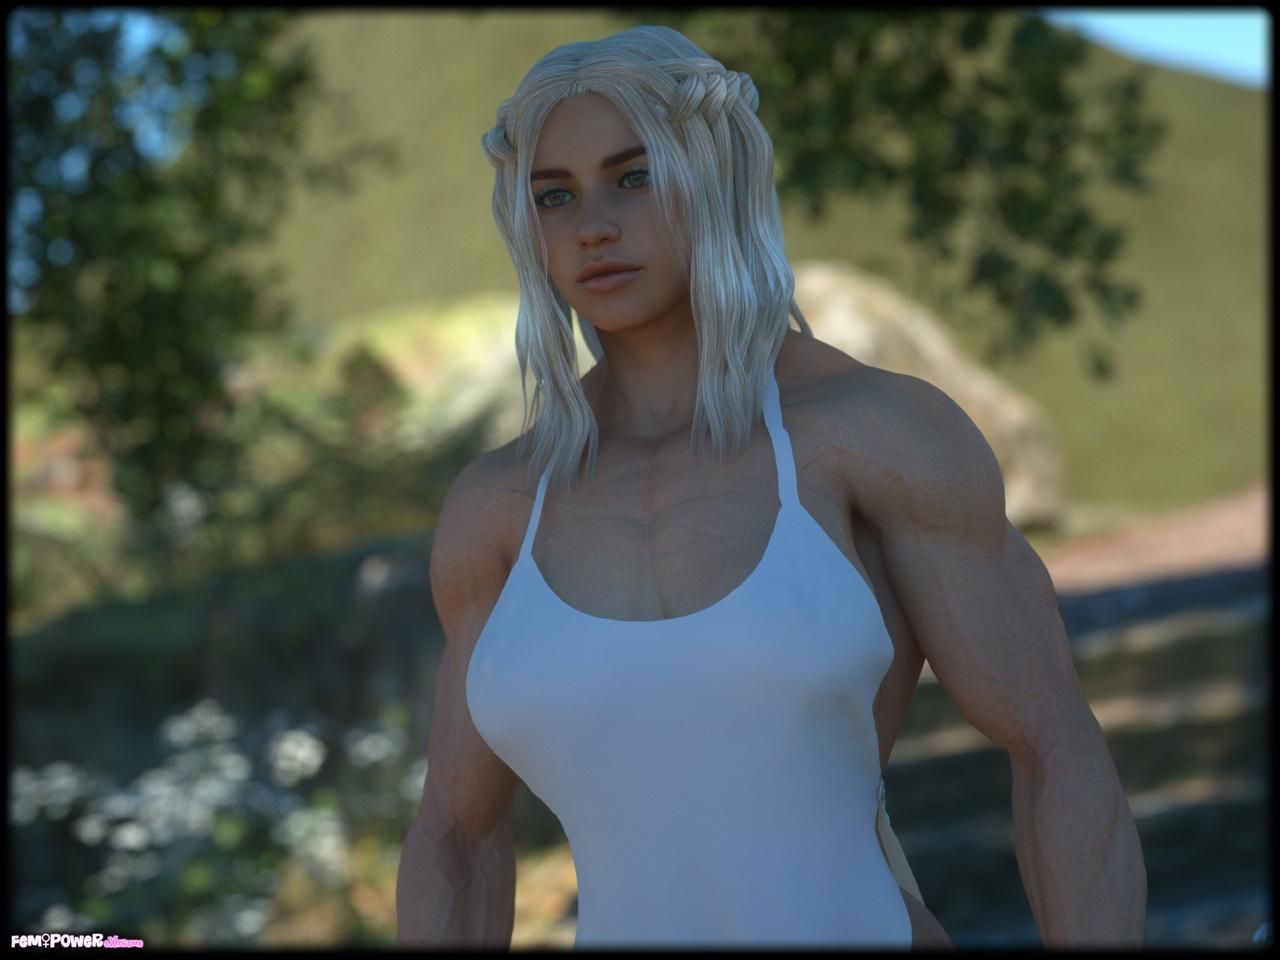 Muscle girls 3D models_ part 2 by Tigersan 6